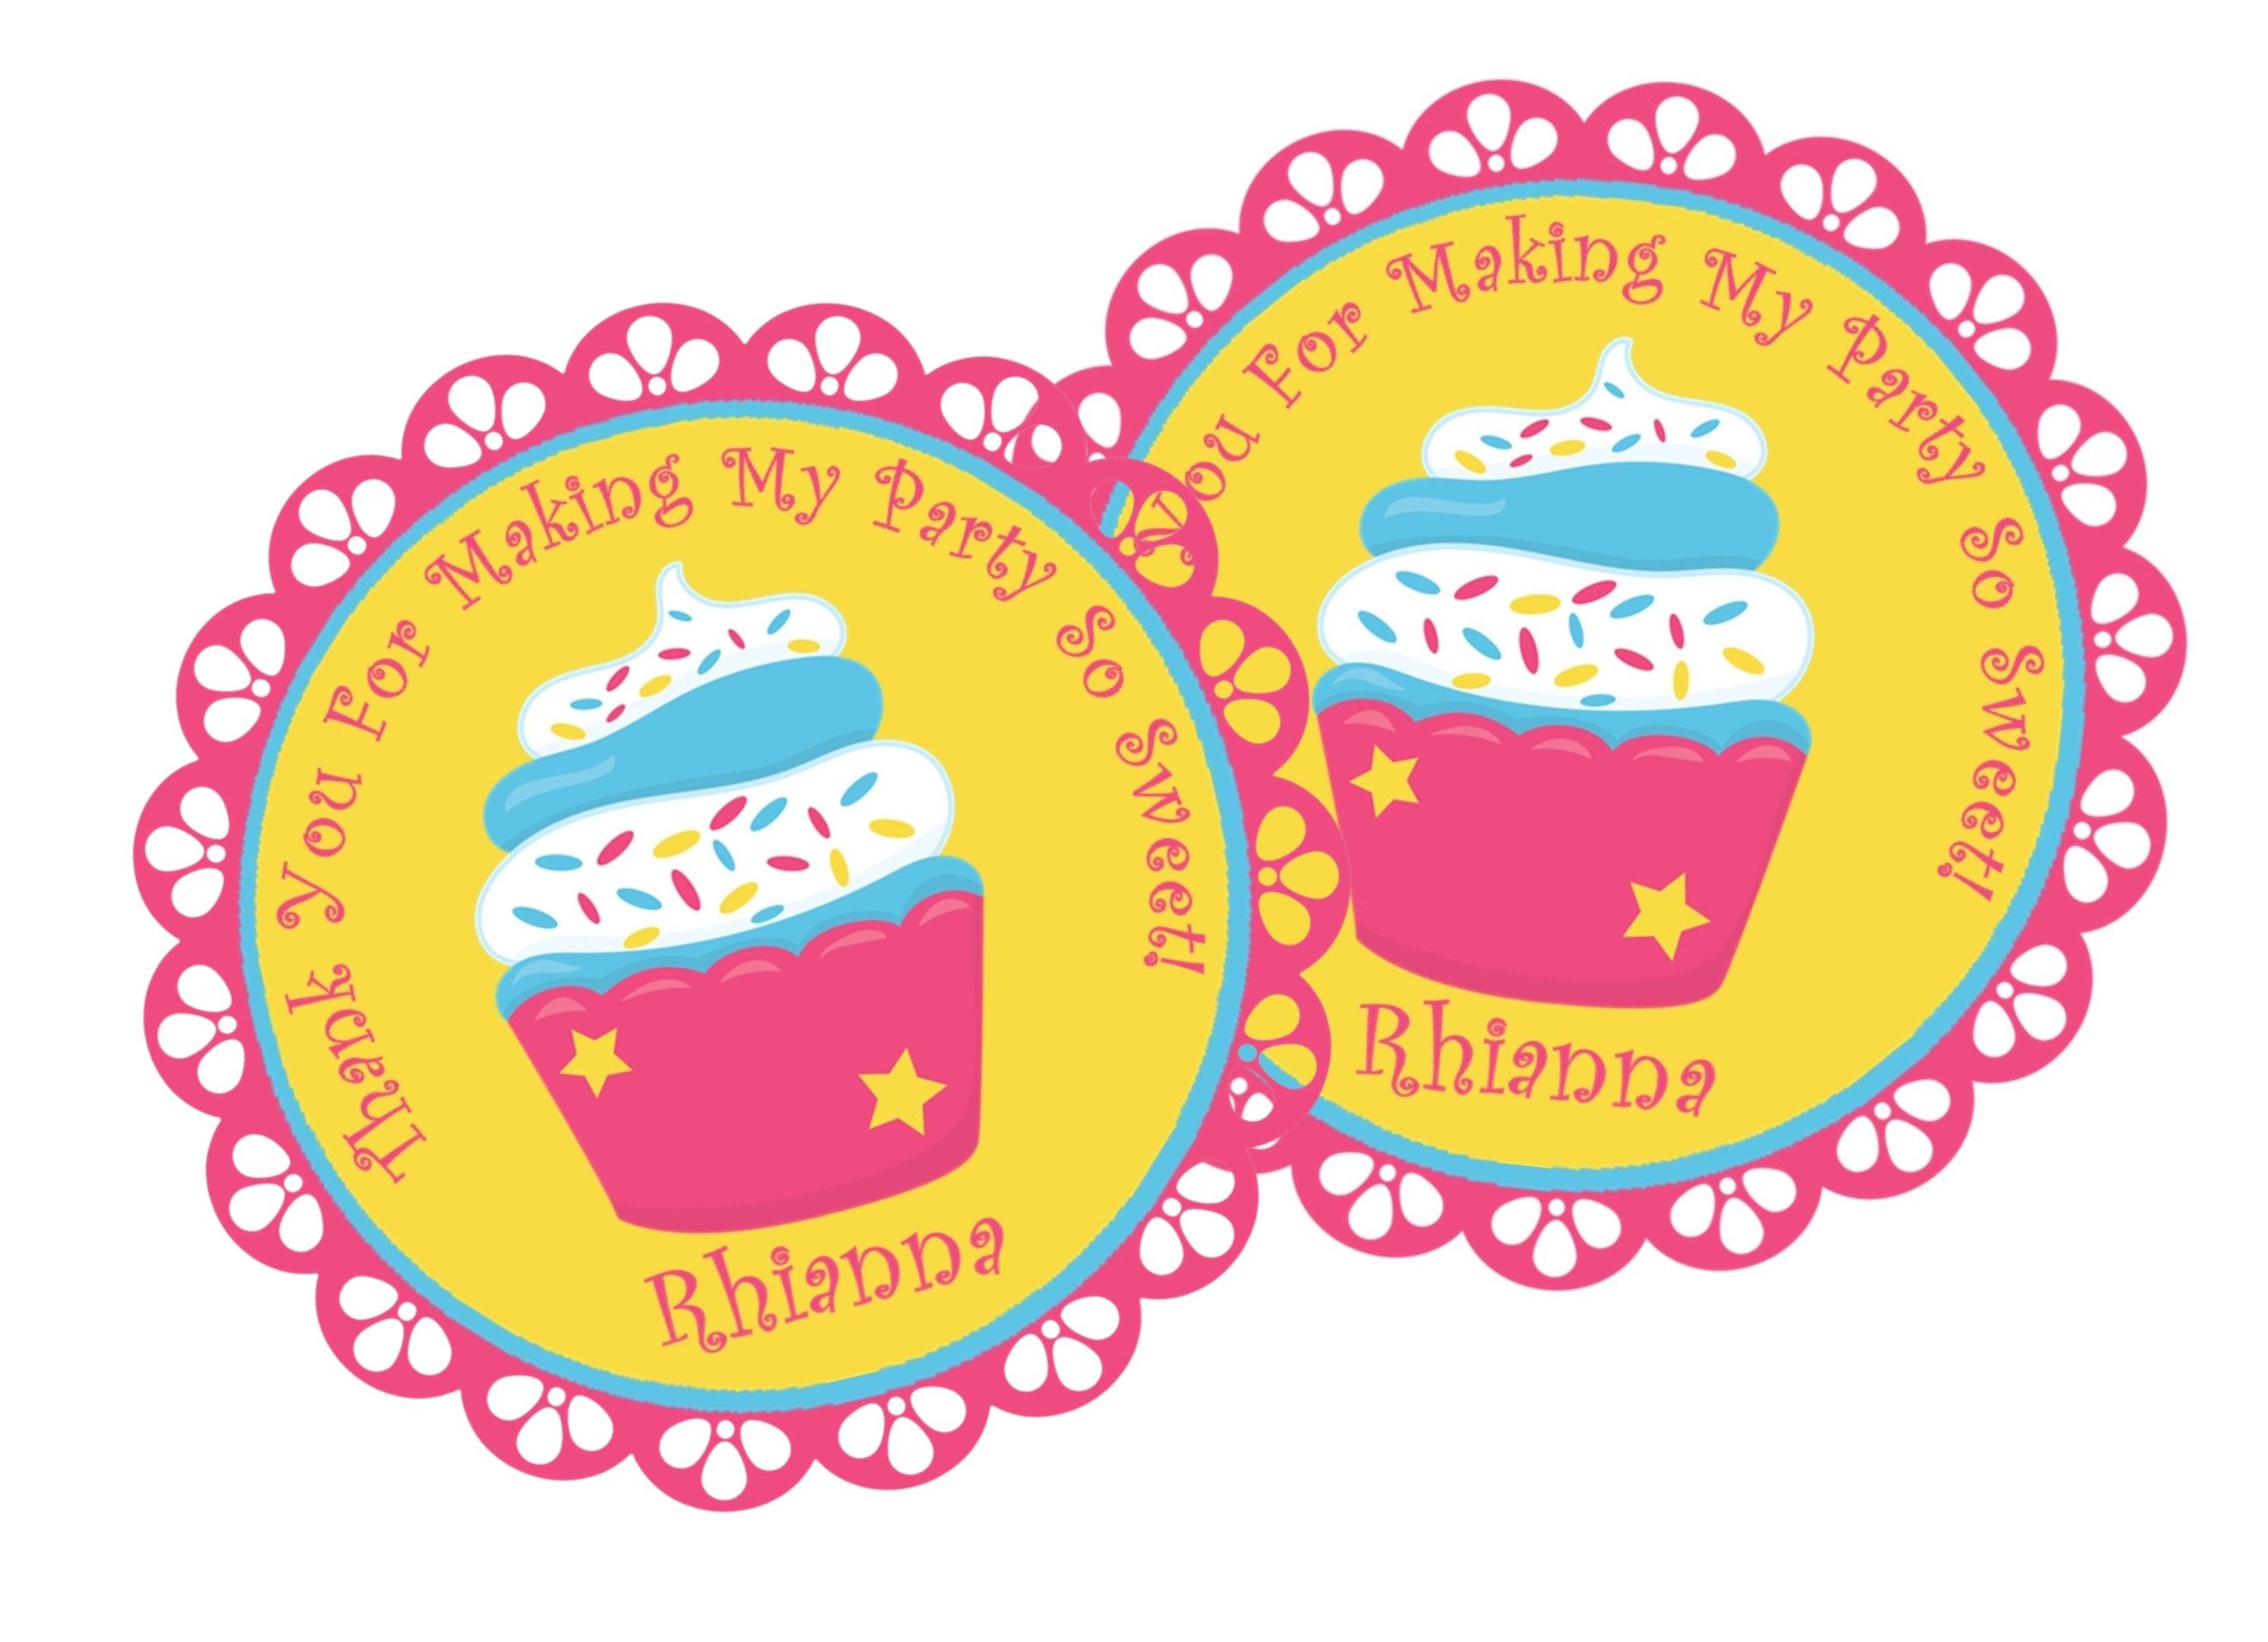 Cupcake Birthday Party Stickers